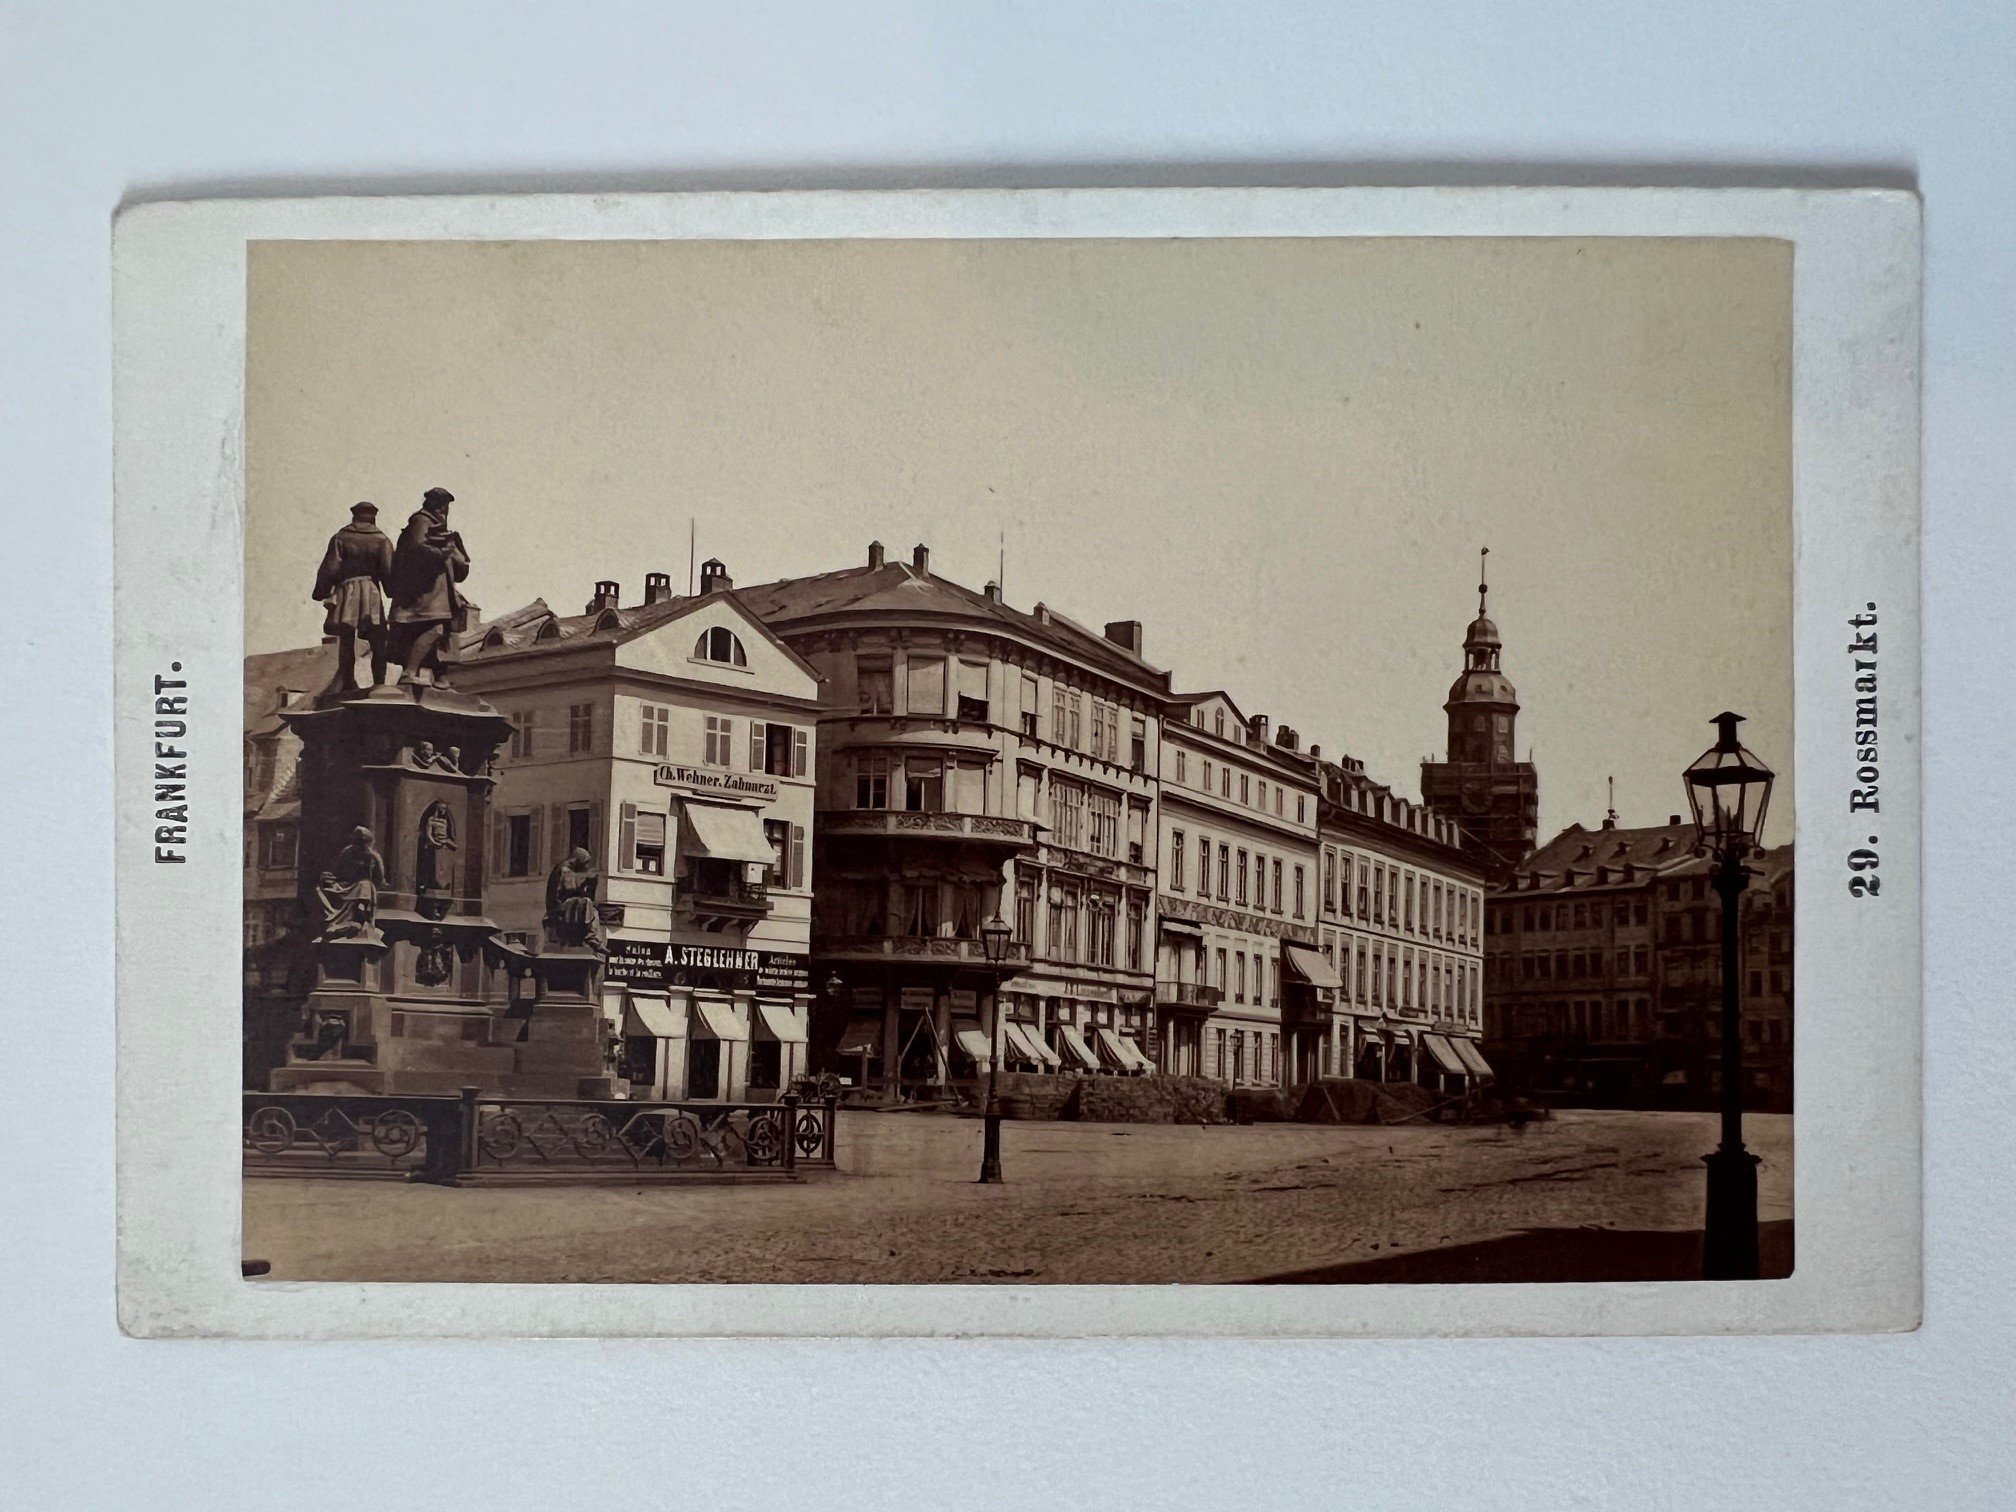 CdV, Frantisek Fridrich, Frankfurt, Nr. 29, Rossmarkt, ca. 1875. (Taunus-Rhein-Main - Regionalgeschichtliche Sammlung Dr. Stefan Naas CC BY-NC-SA)